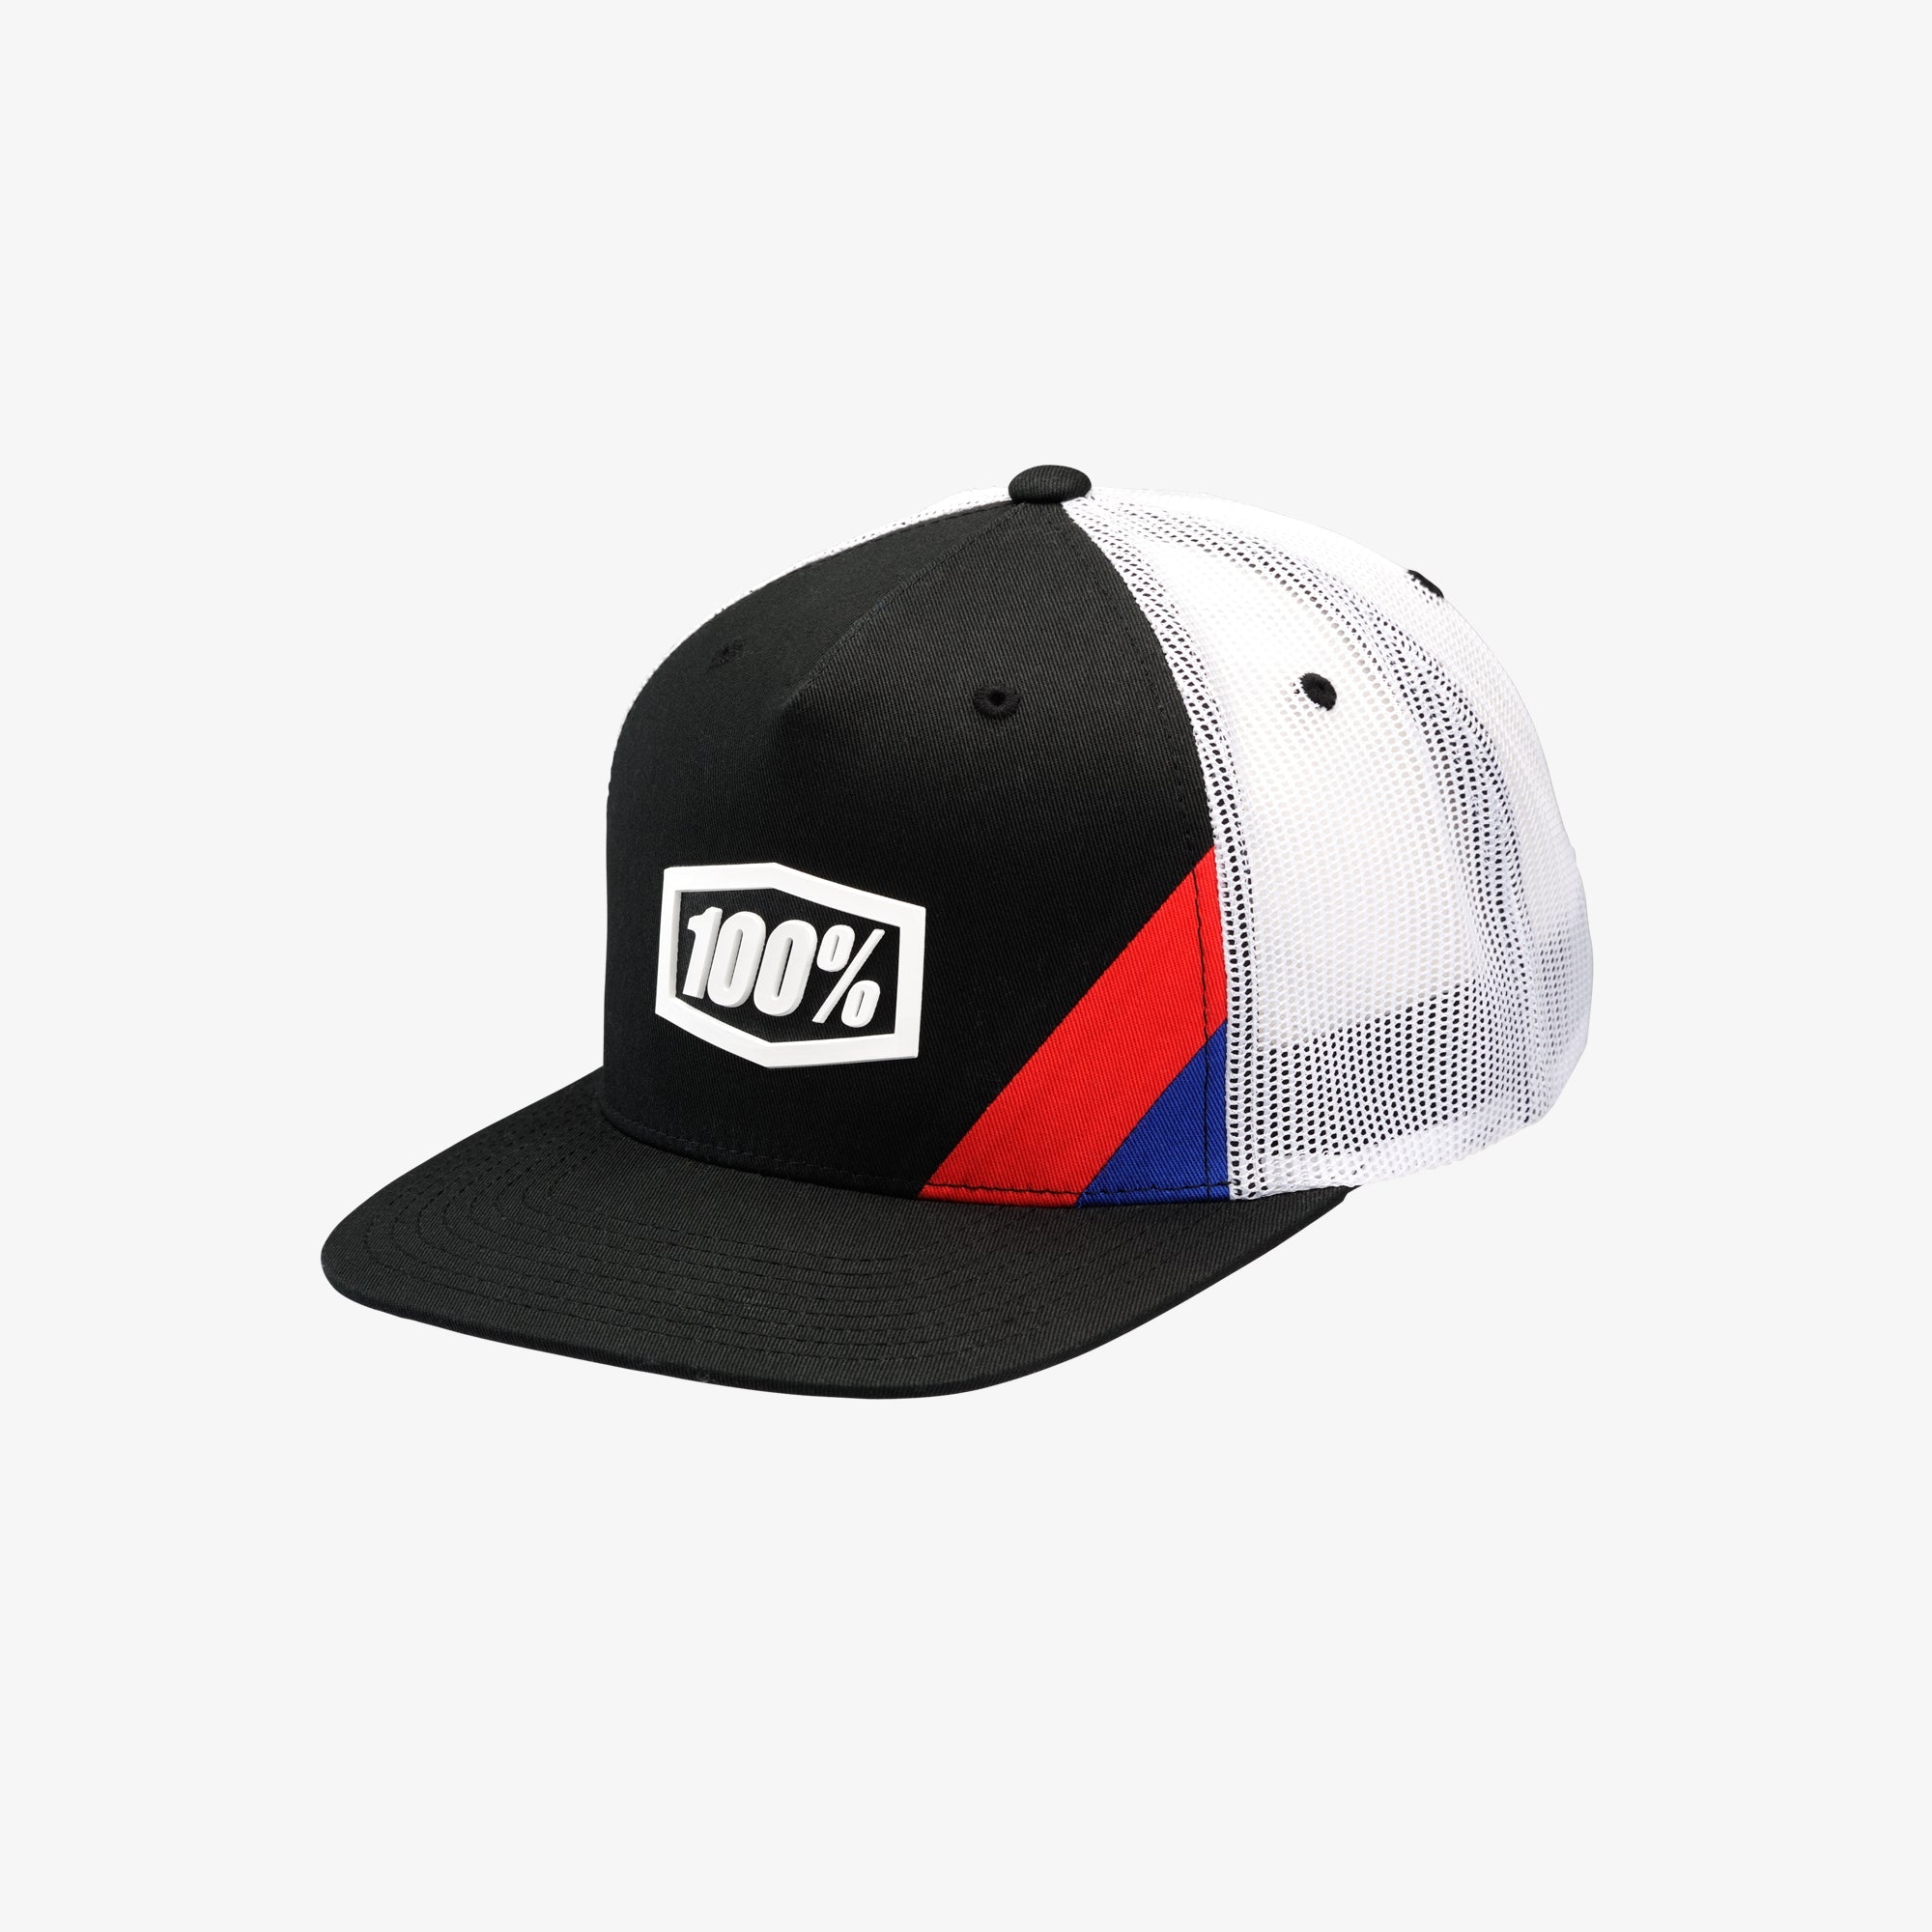 CORNERSTONE Youth Snapback Hat Black - OS